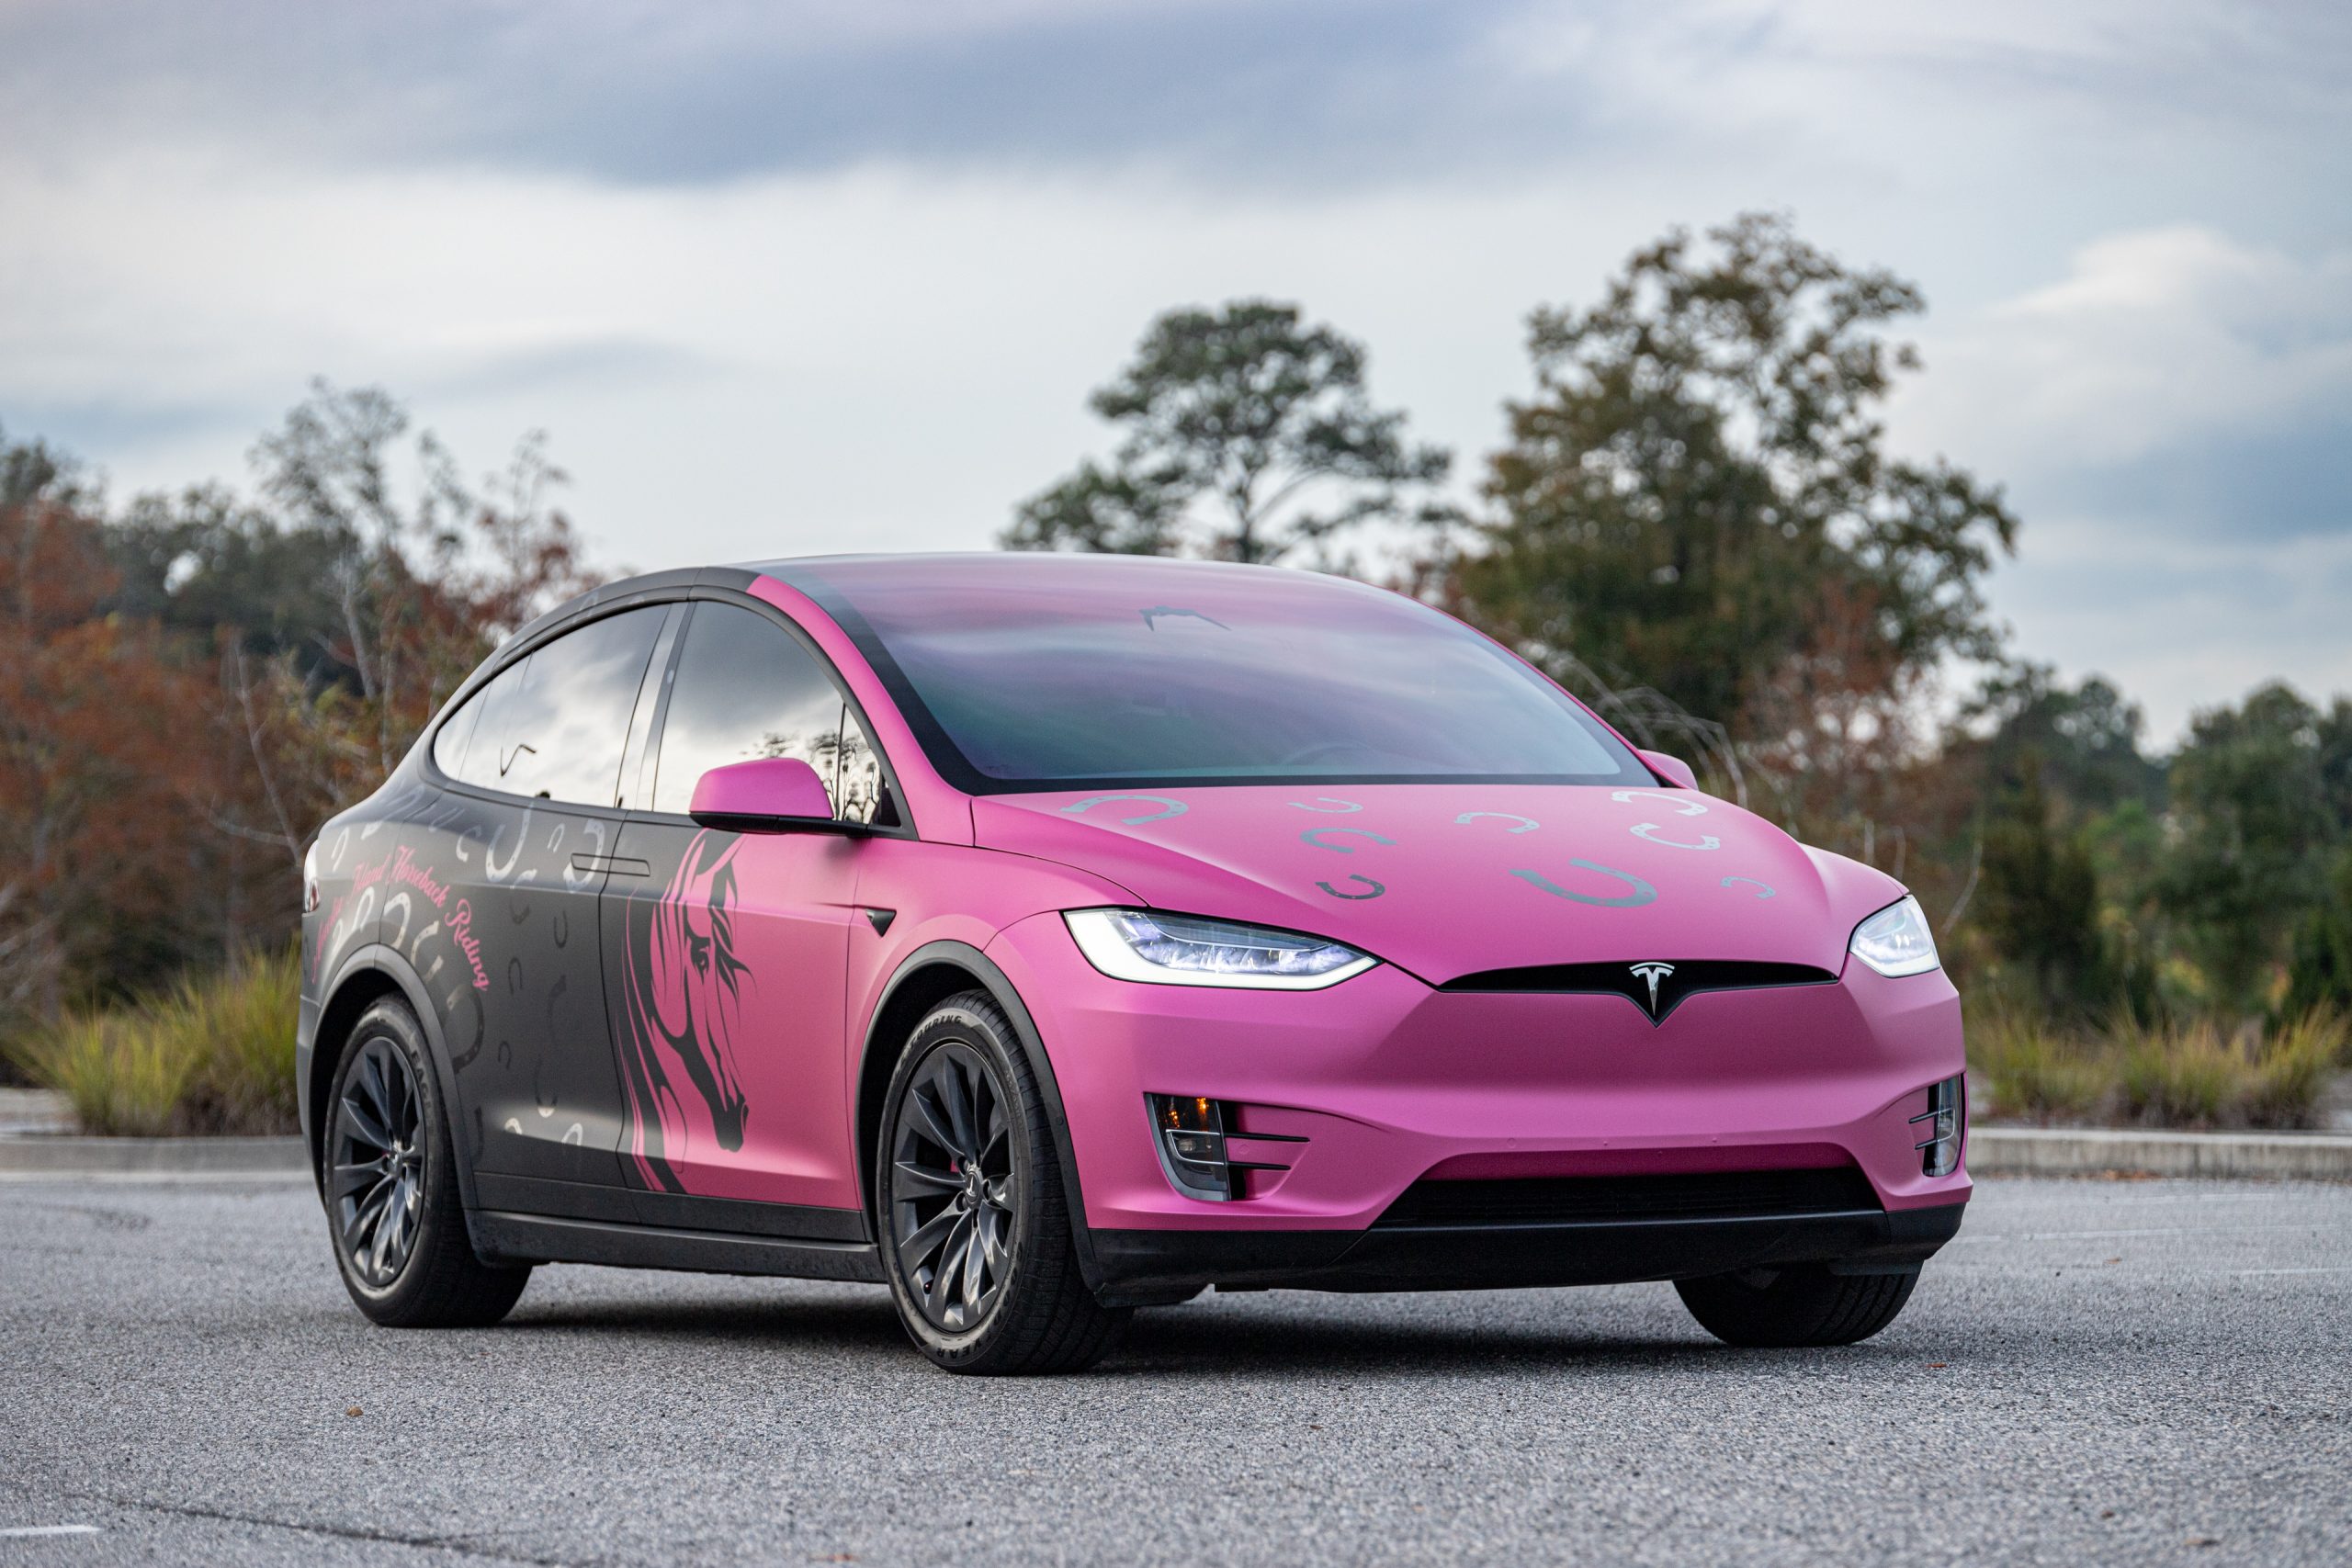 Pink and black Tesla SUV